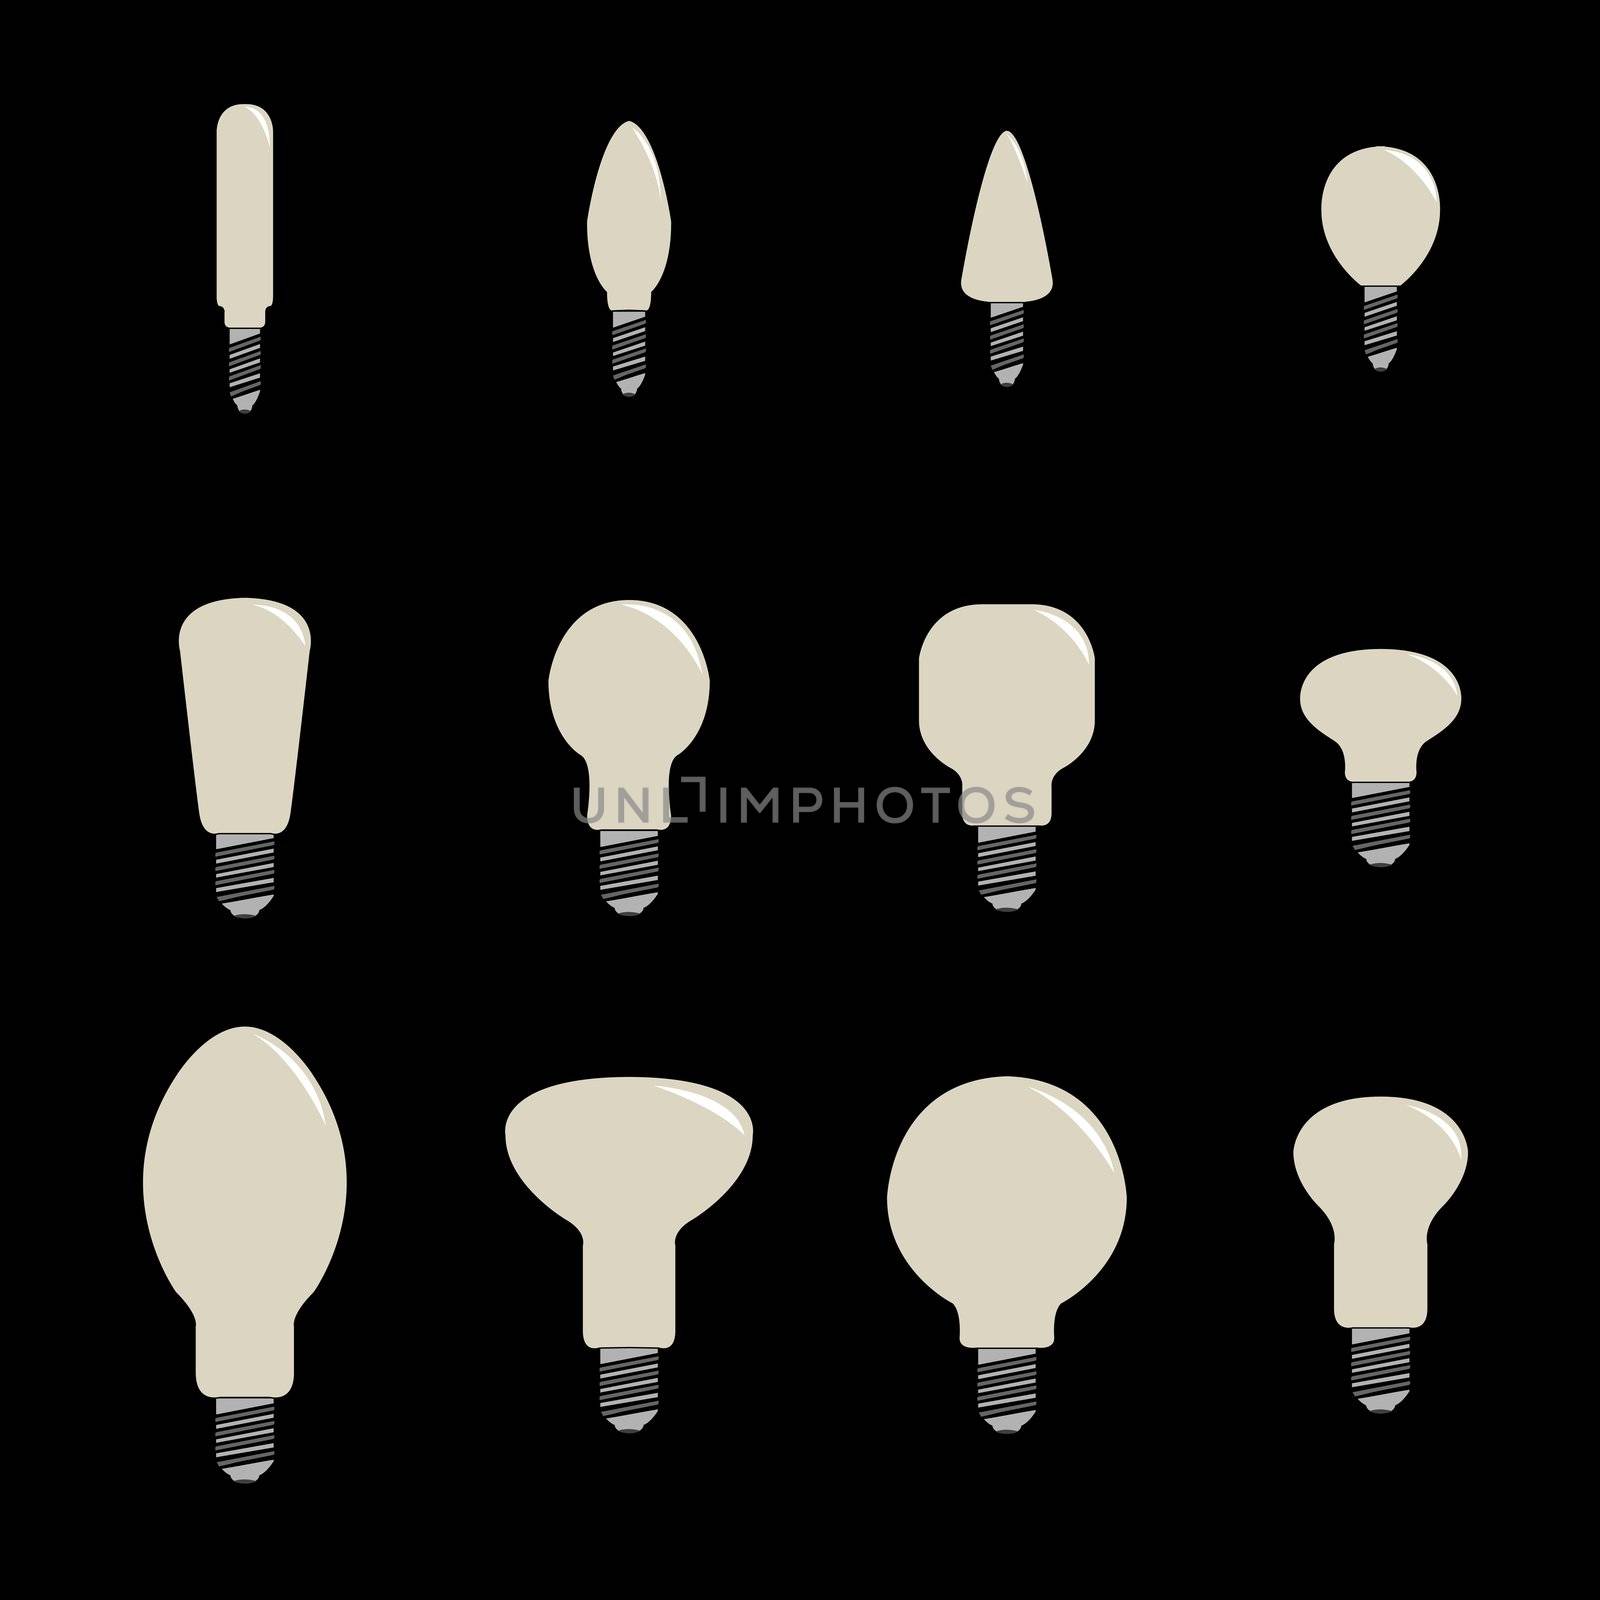 stylized light bulbs, vector art illustration